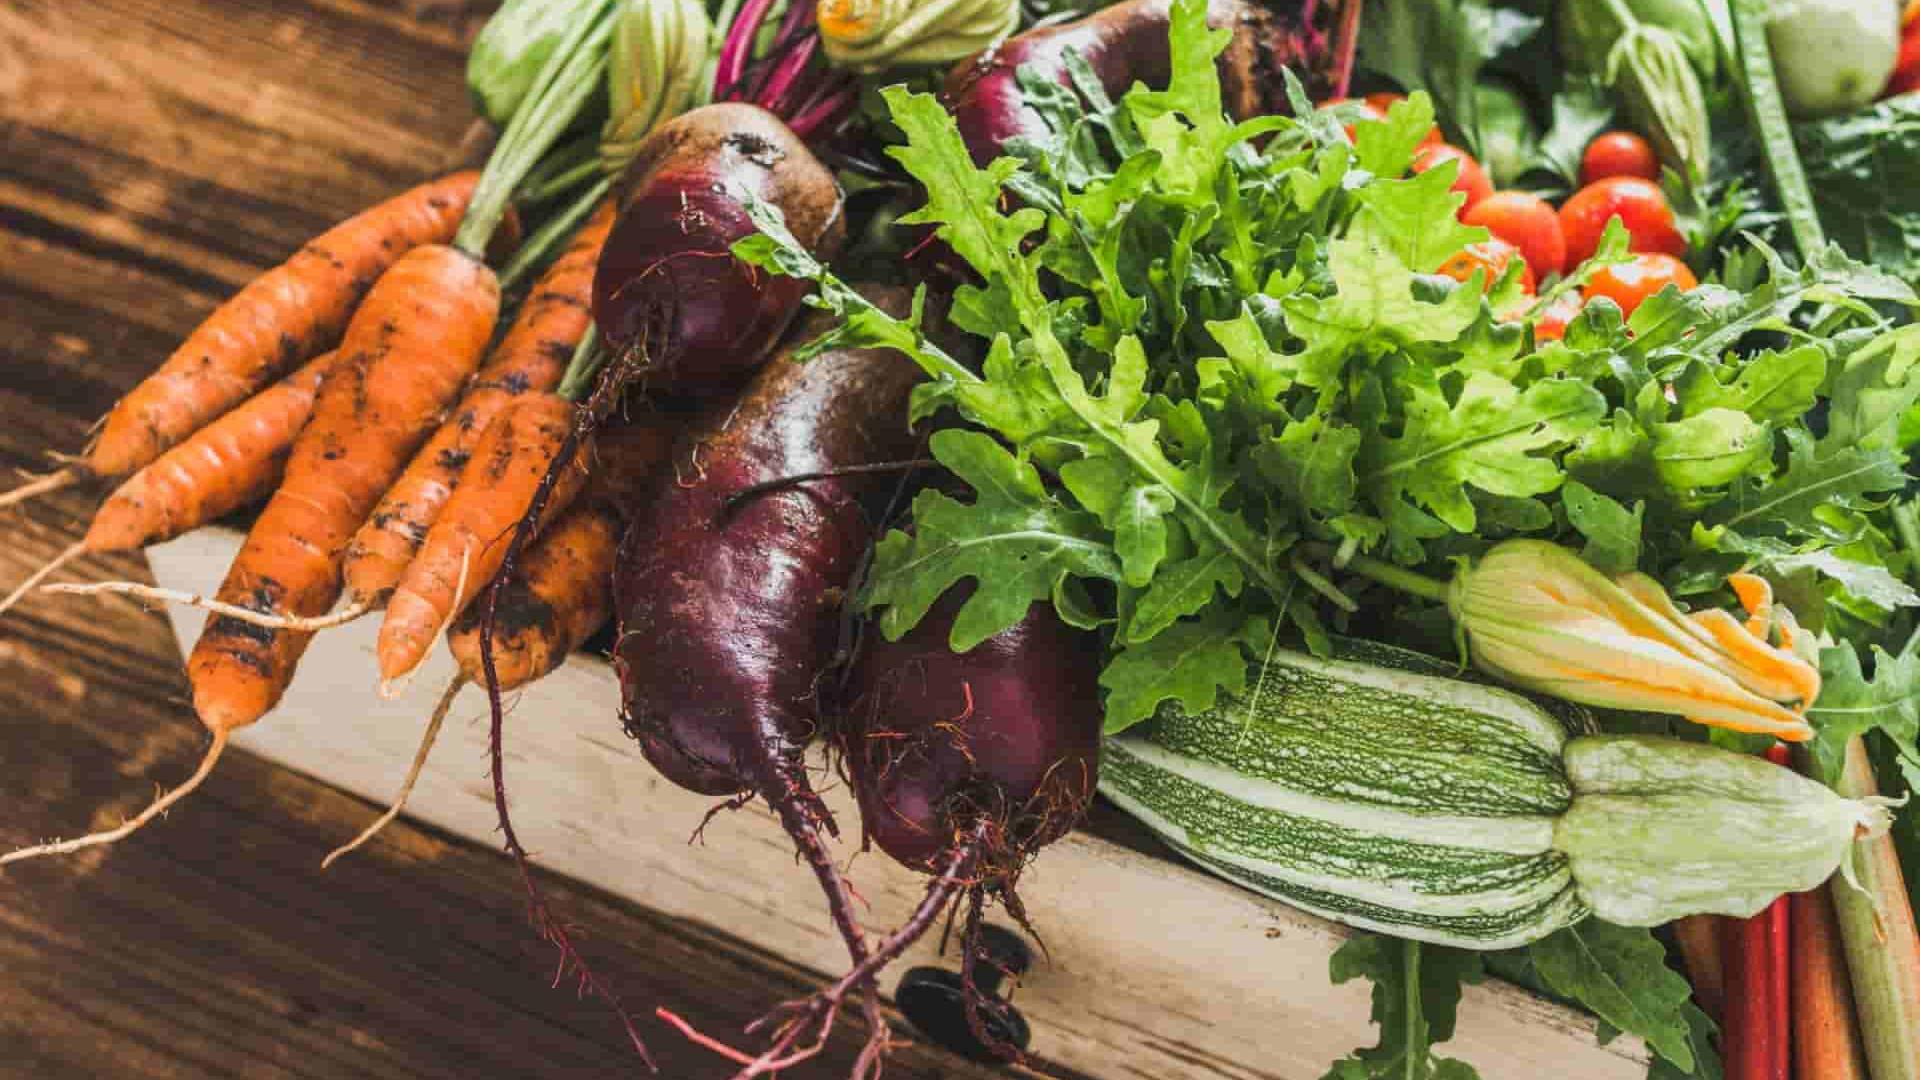 Bio organic vegetables on farmer market, farm fresh vegetable box on wooden background, vegetarian food concept